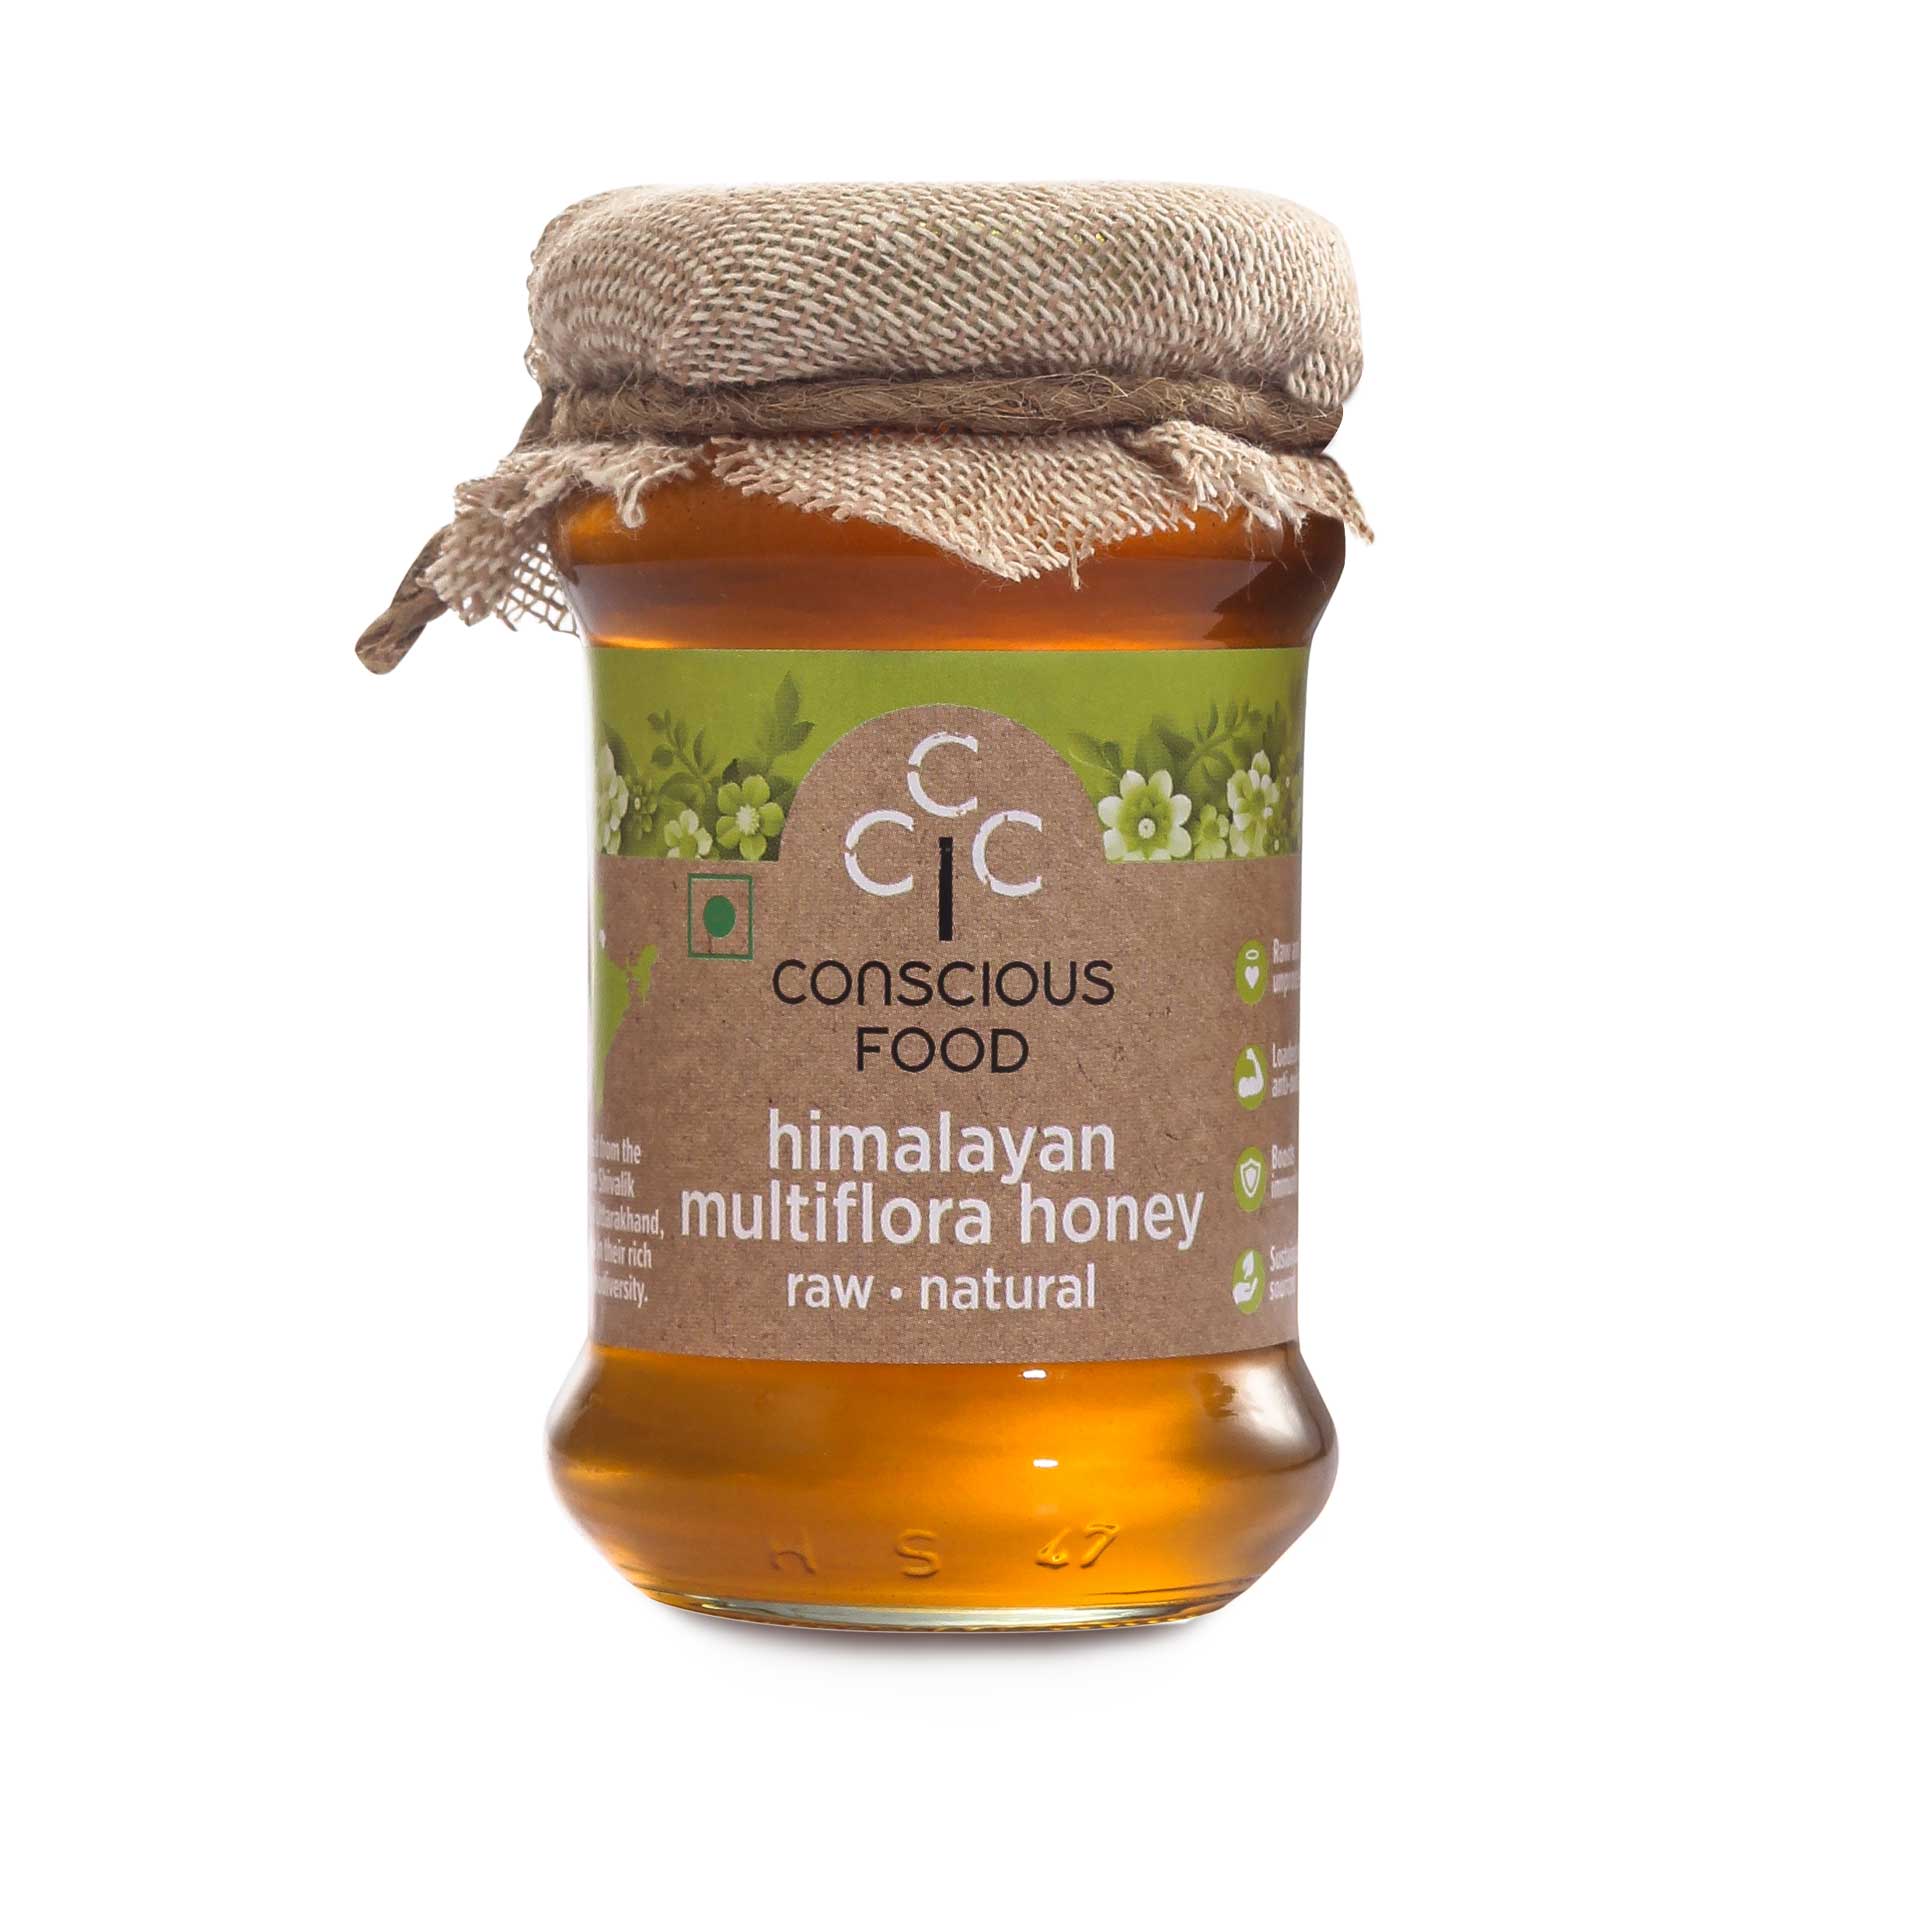 Product: Conscious Food Himaliyan Multi Flora Honey